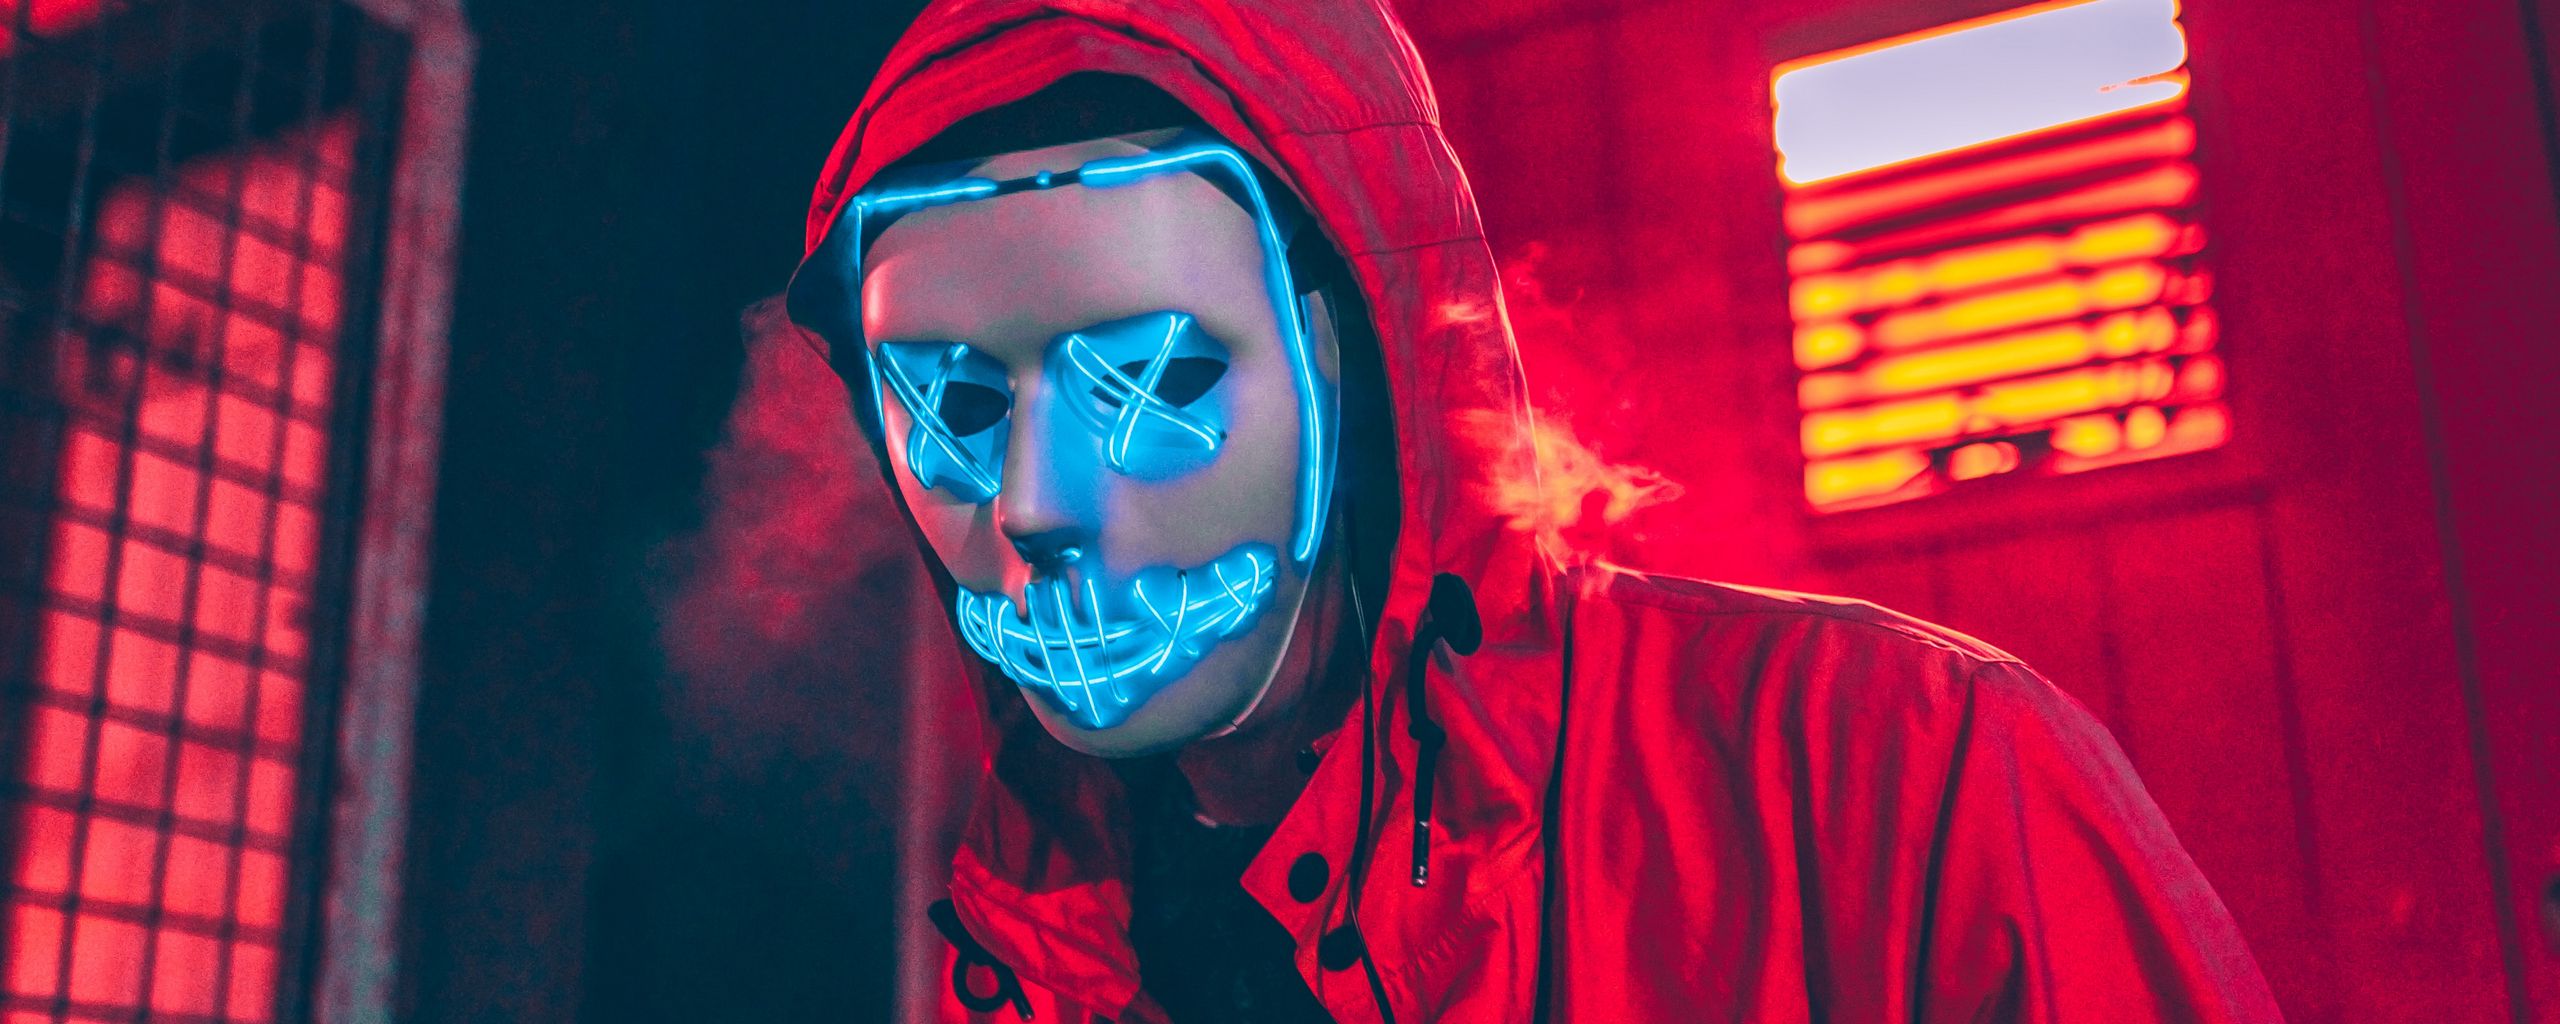 Download wallpaper 2560x1024 neon mask, mask, man, hood, red ultrawide monitor HD background